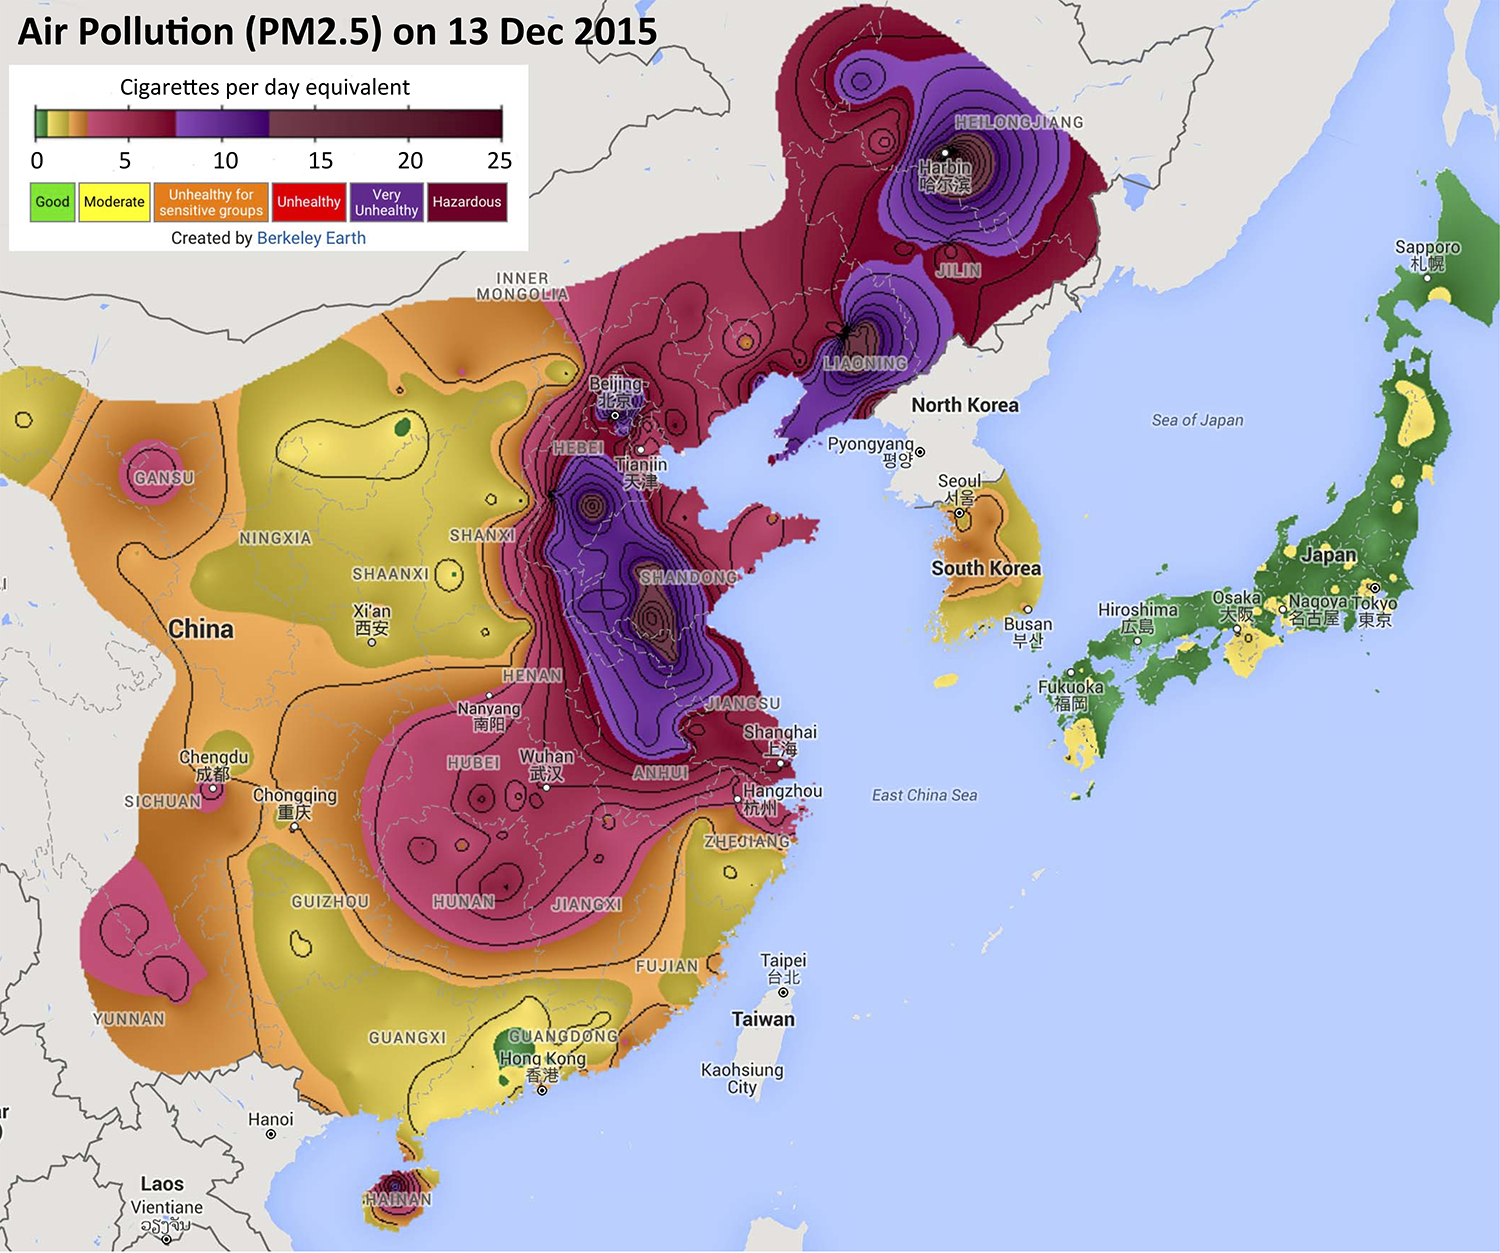 China cigarette map 13 Dec 2015 sm